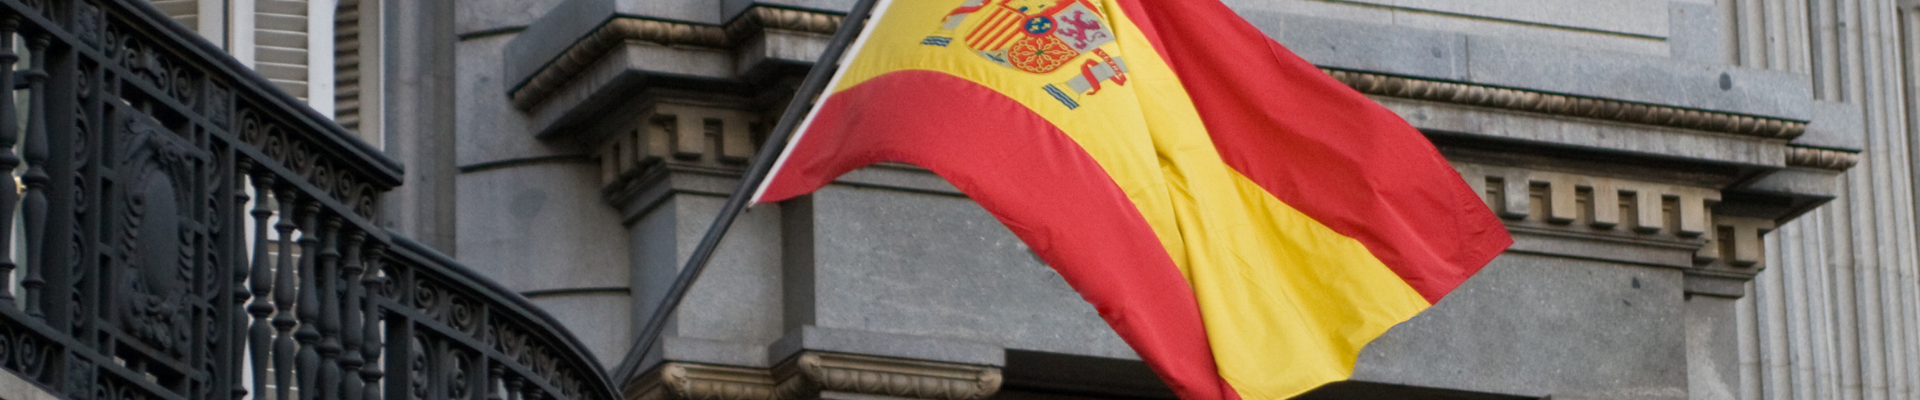 spanish flag in city